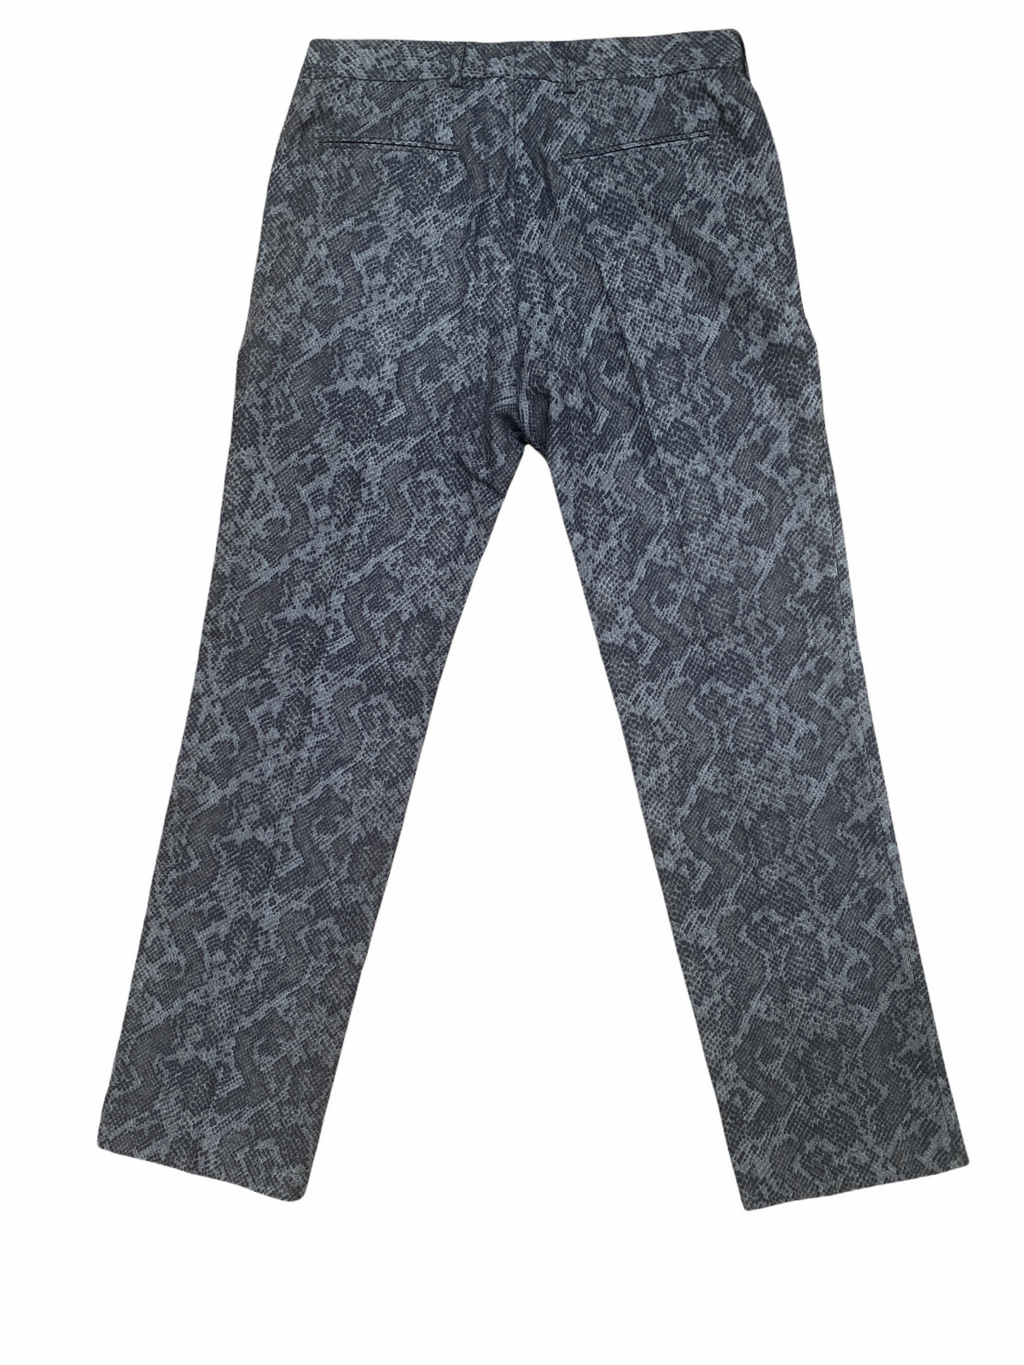 Grey Snakeskin print Wool Trousers Size US 32